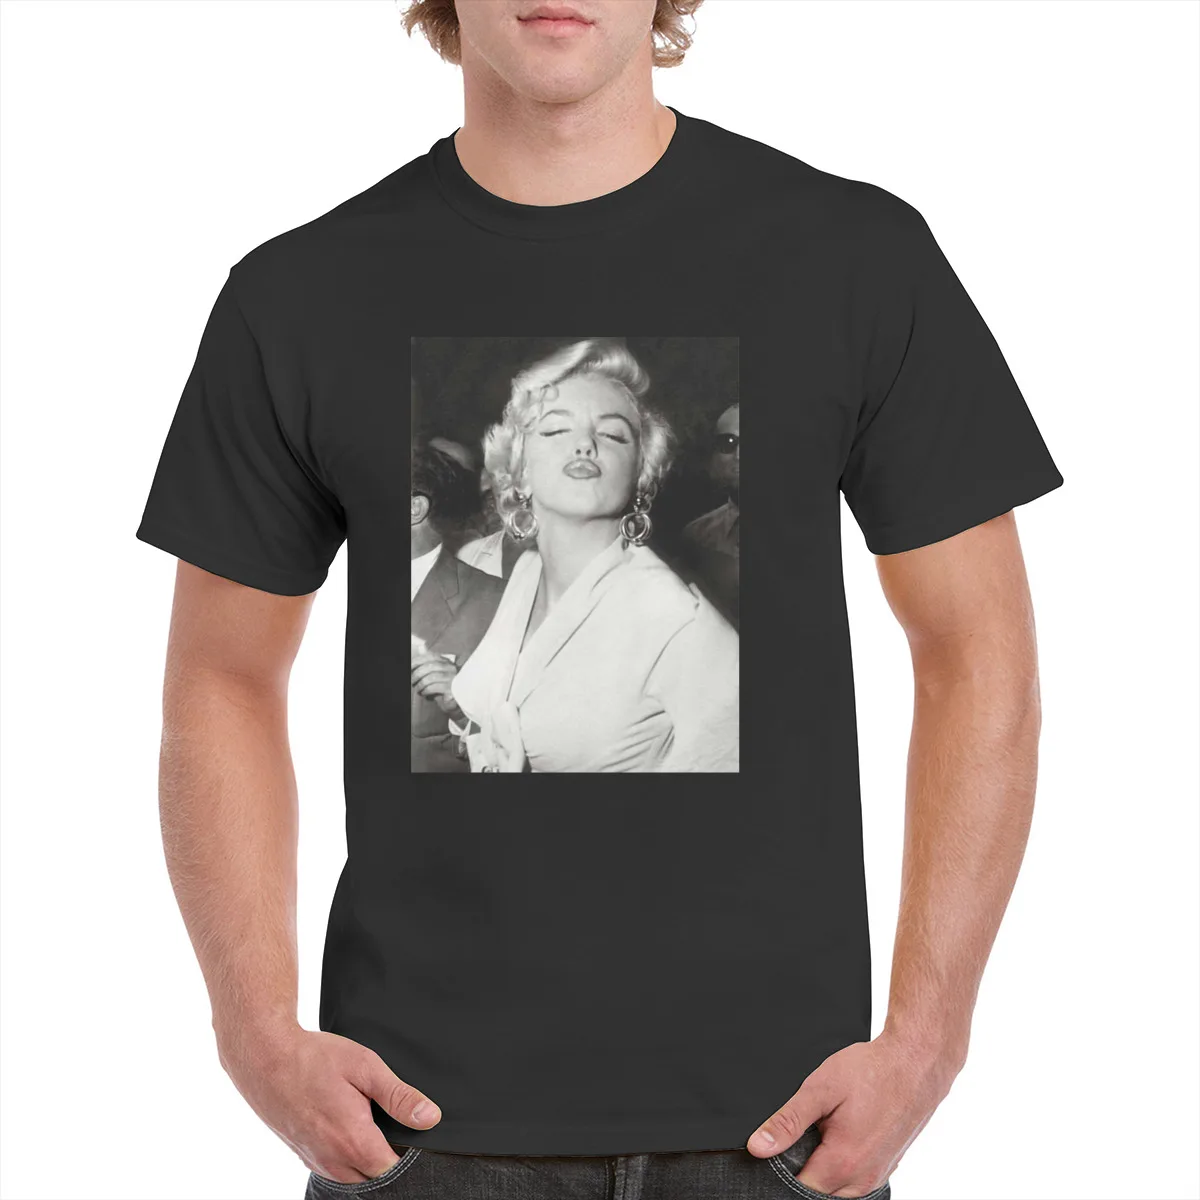 

100% Cotton Marilyn Monroe Black and white Tops t shirt Unisex Trending Popular 90'S Graphics T-Shirt Cute Female/Man